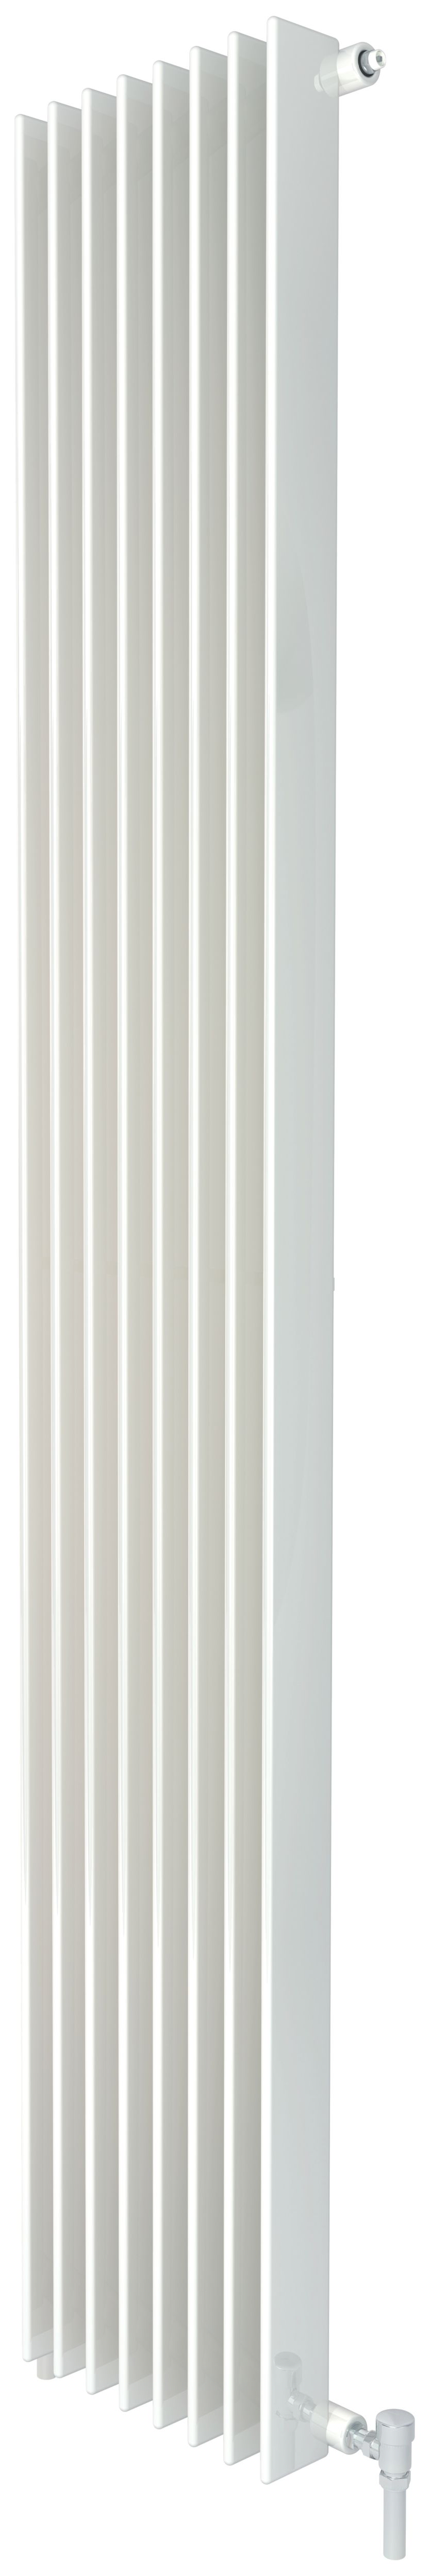 Image of Henrad Verona Slim Single Panel Vertical Designer Radiator - White 1800 x 640 mm